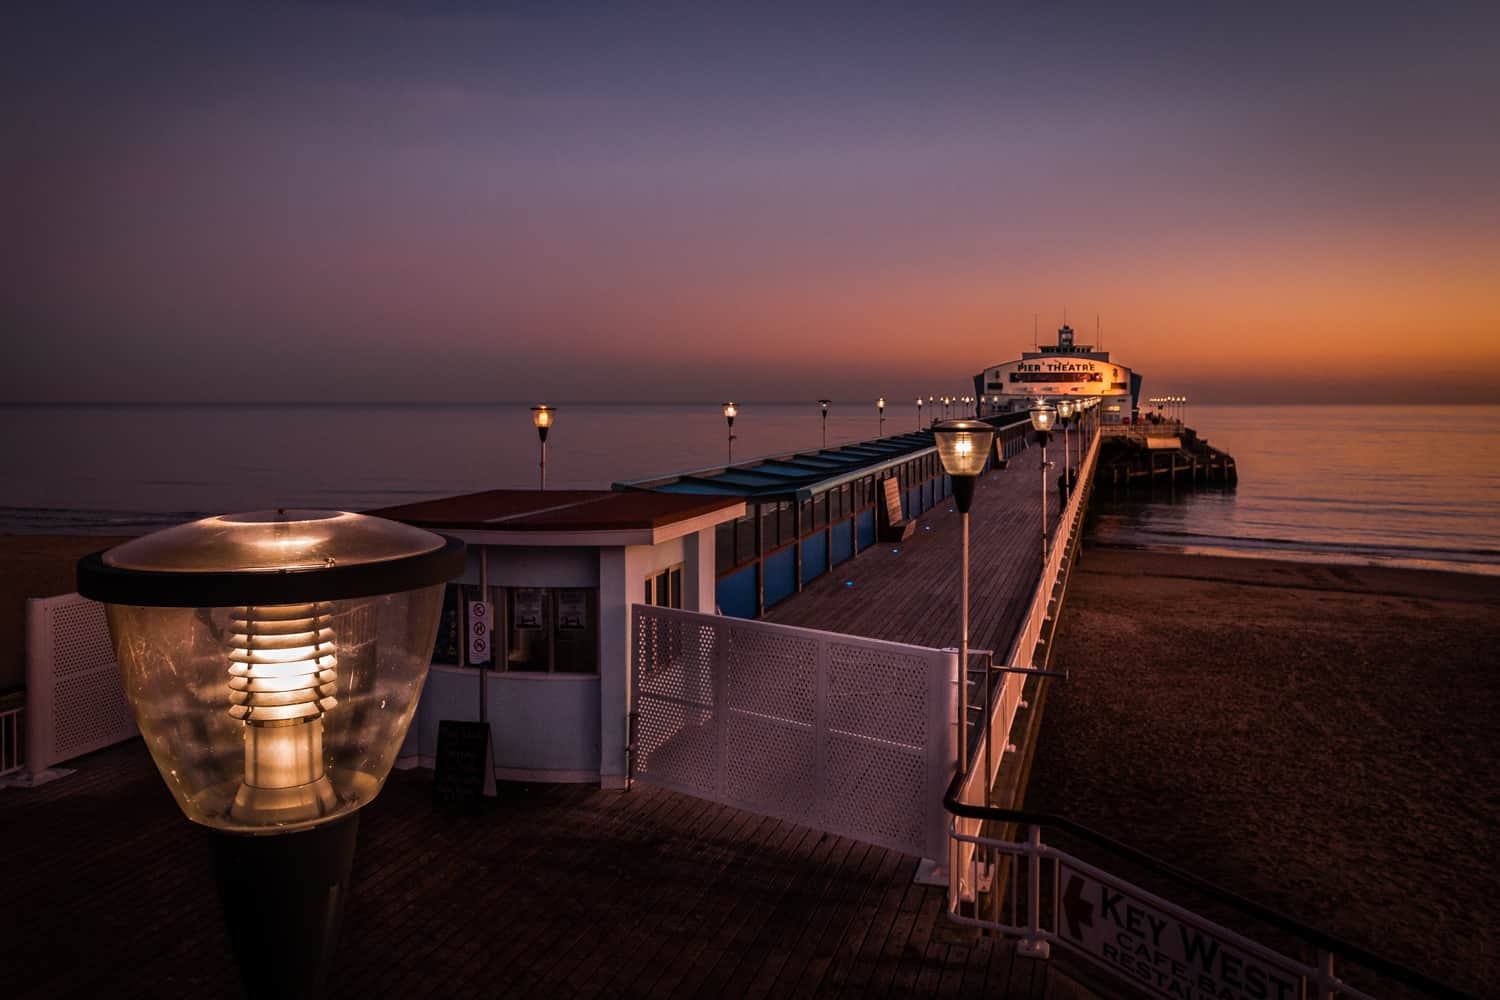  Pier by Bournemouth Photographer Rick McEvoy 